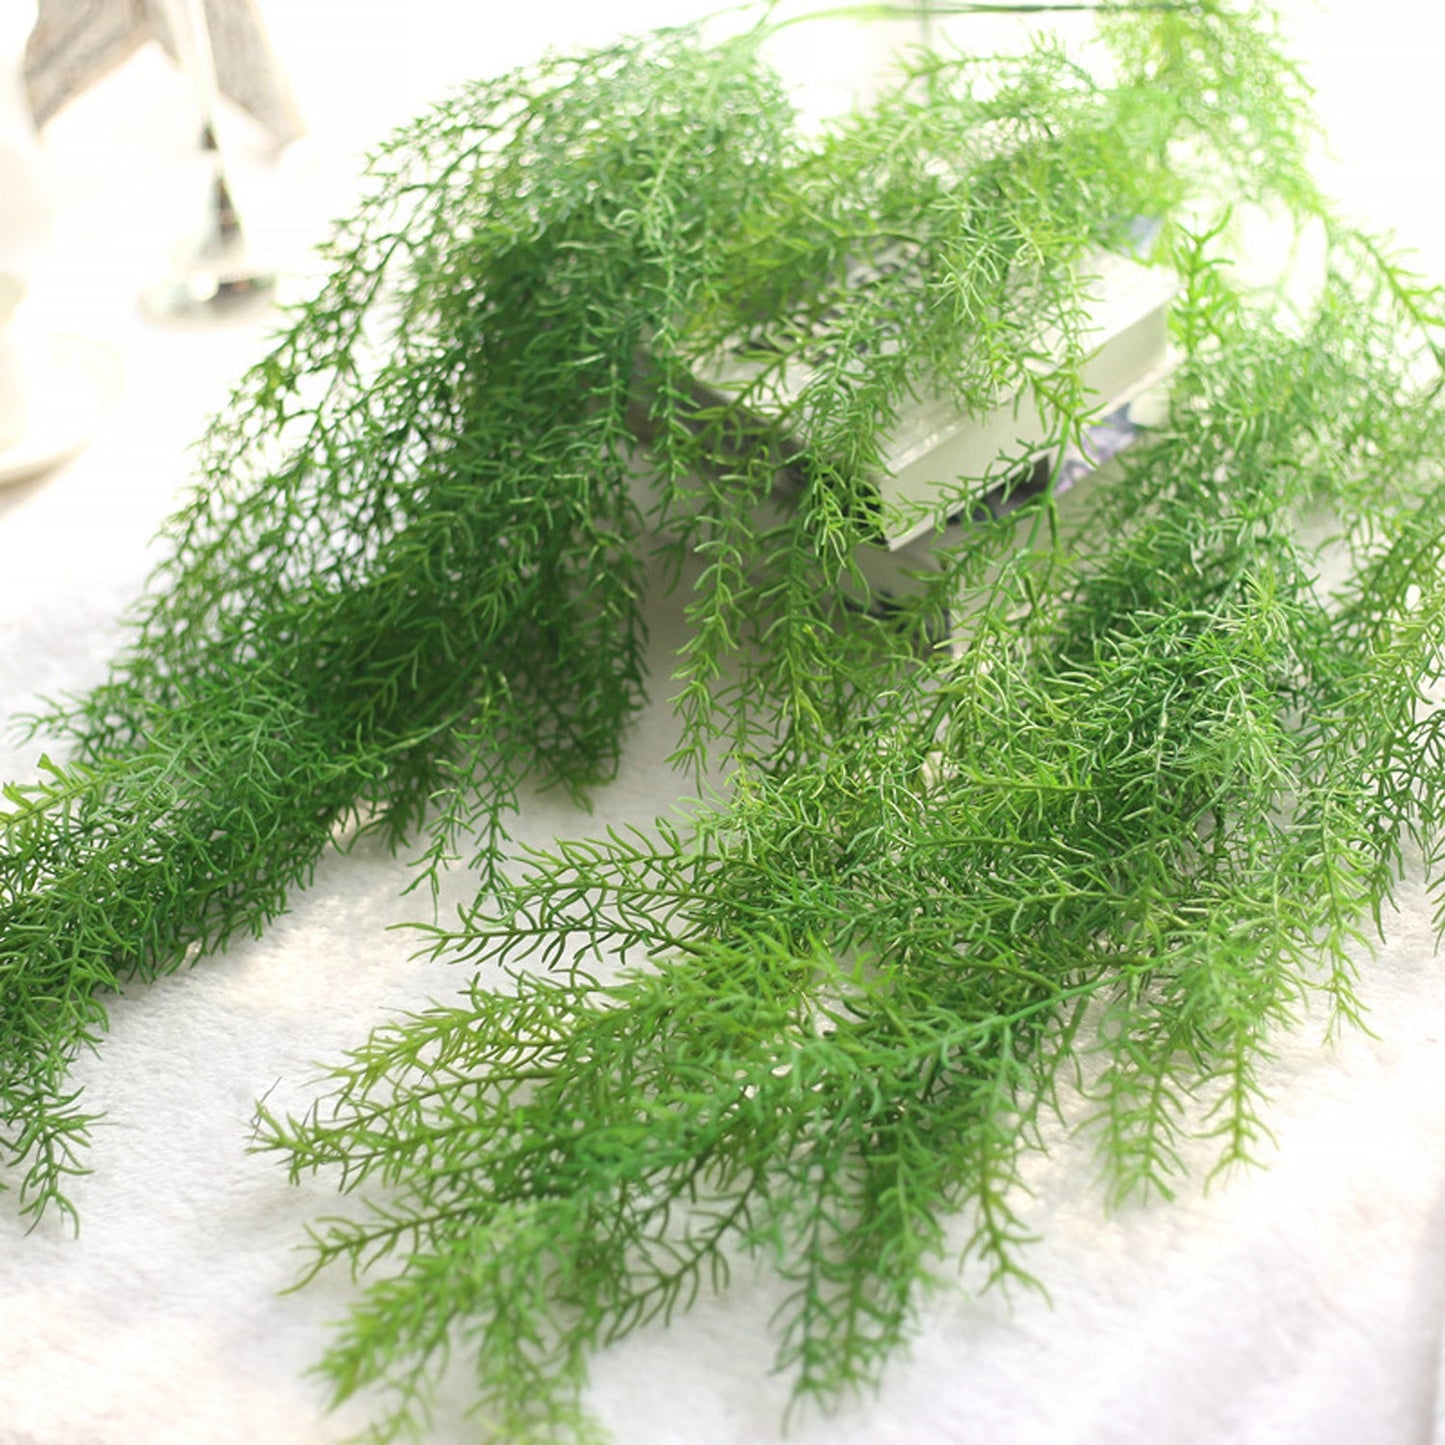 41" Artificial Pine Needle Hanging Plants | 2 Colors